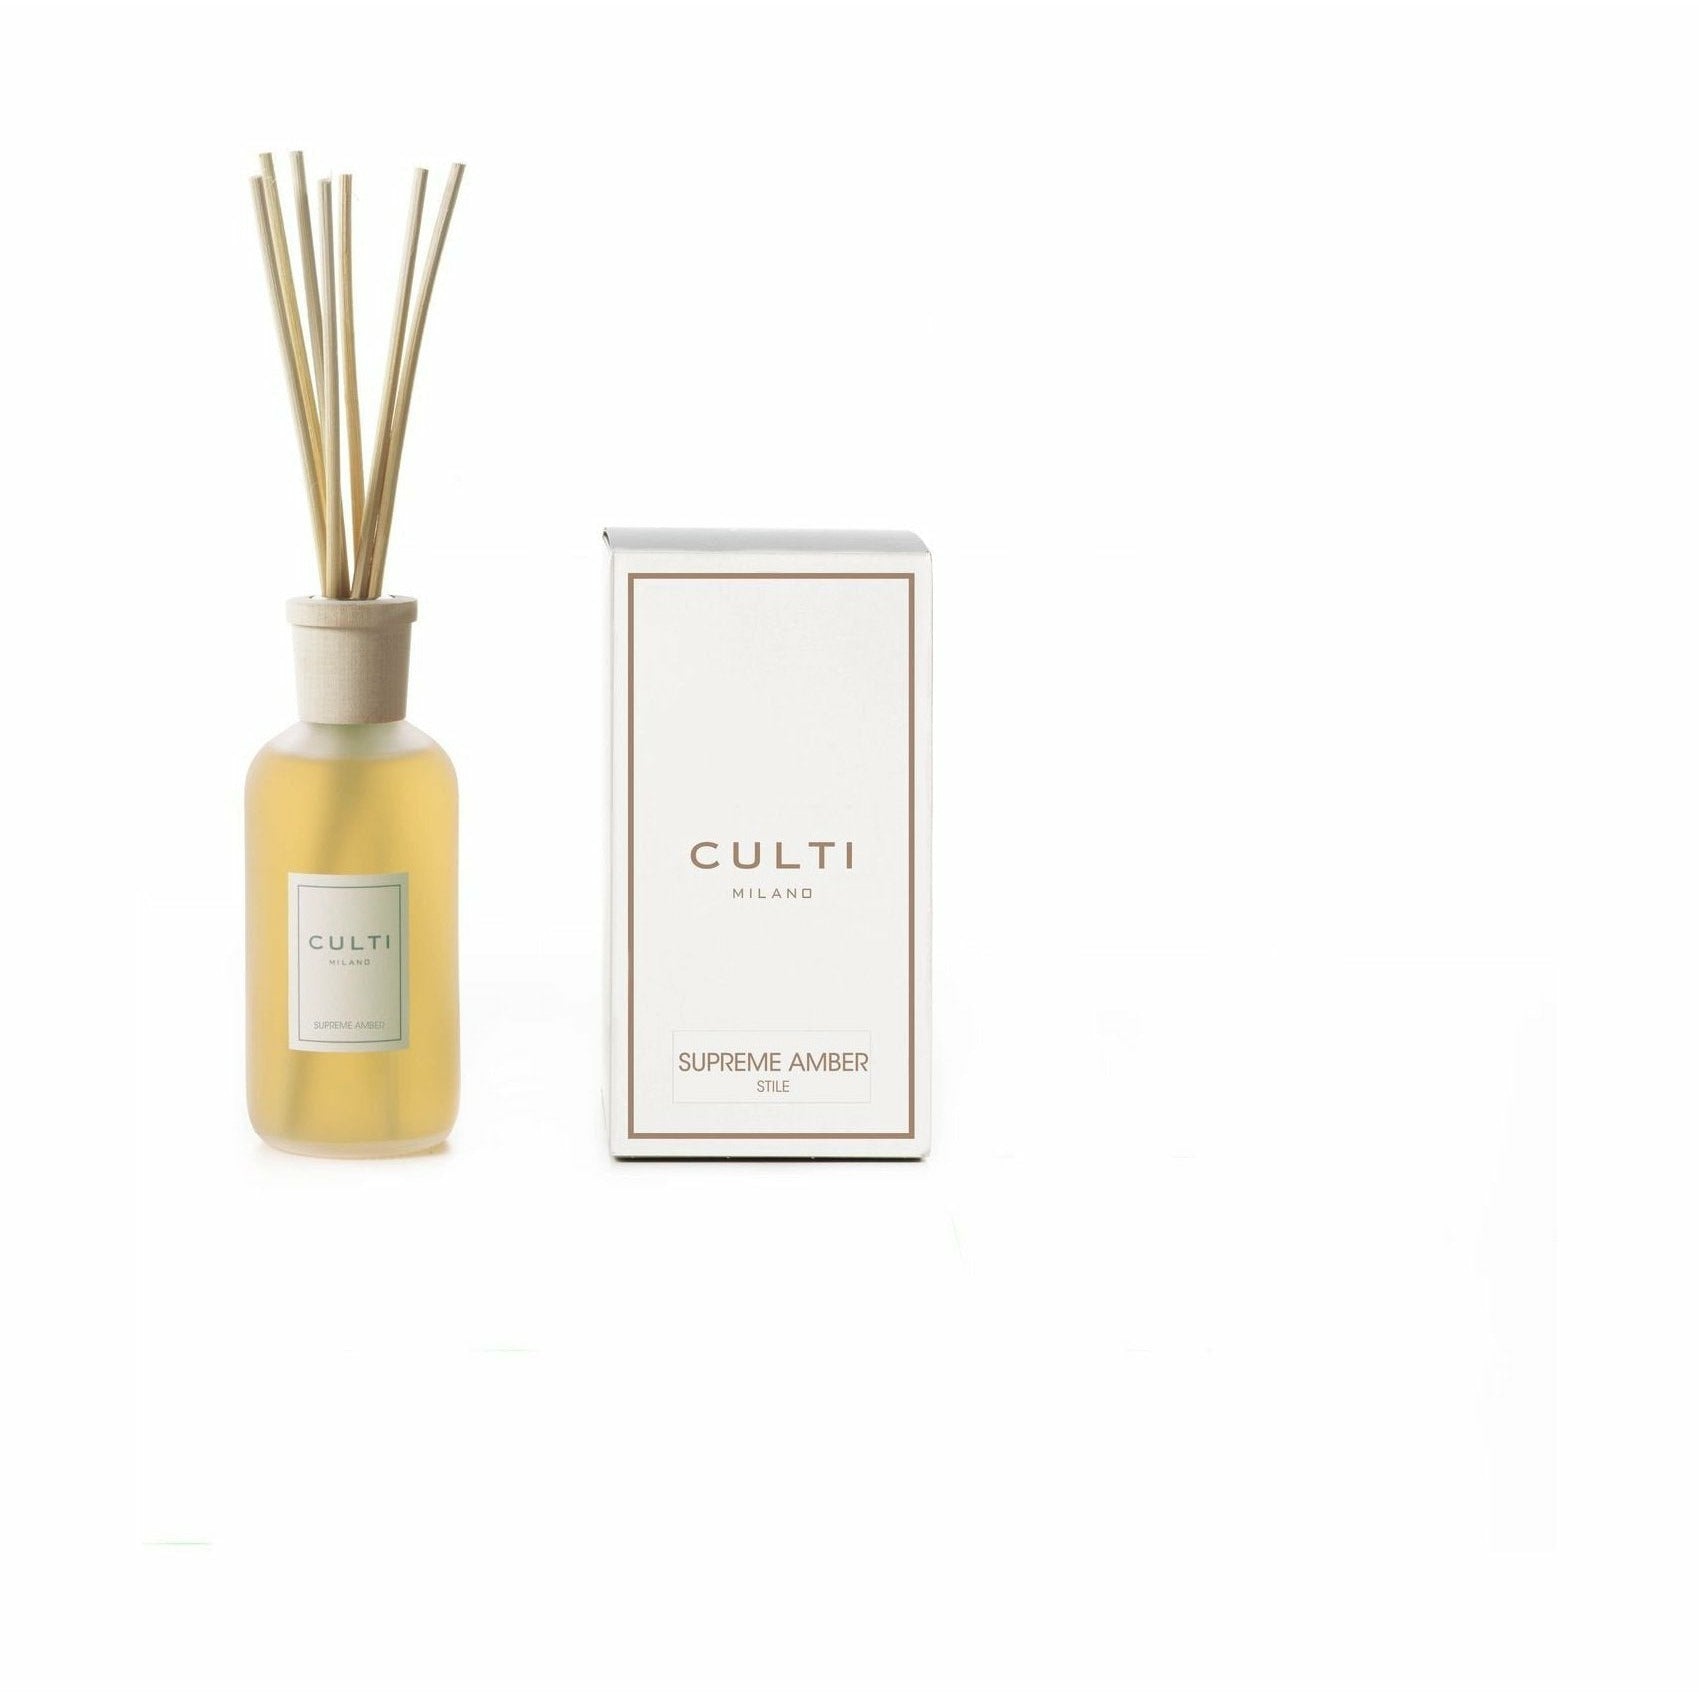 Culti Milano Stile经典香水扩散器最高琥珀色，250毫升